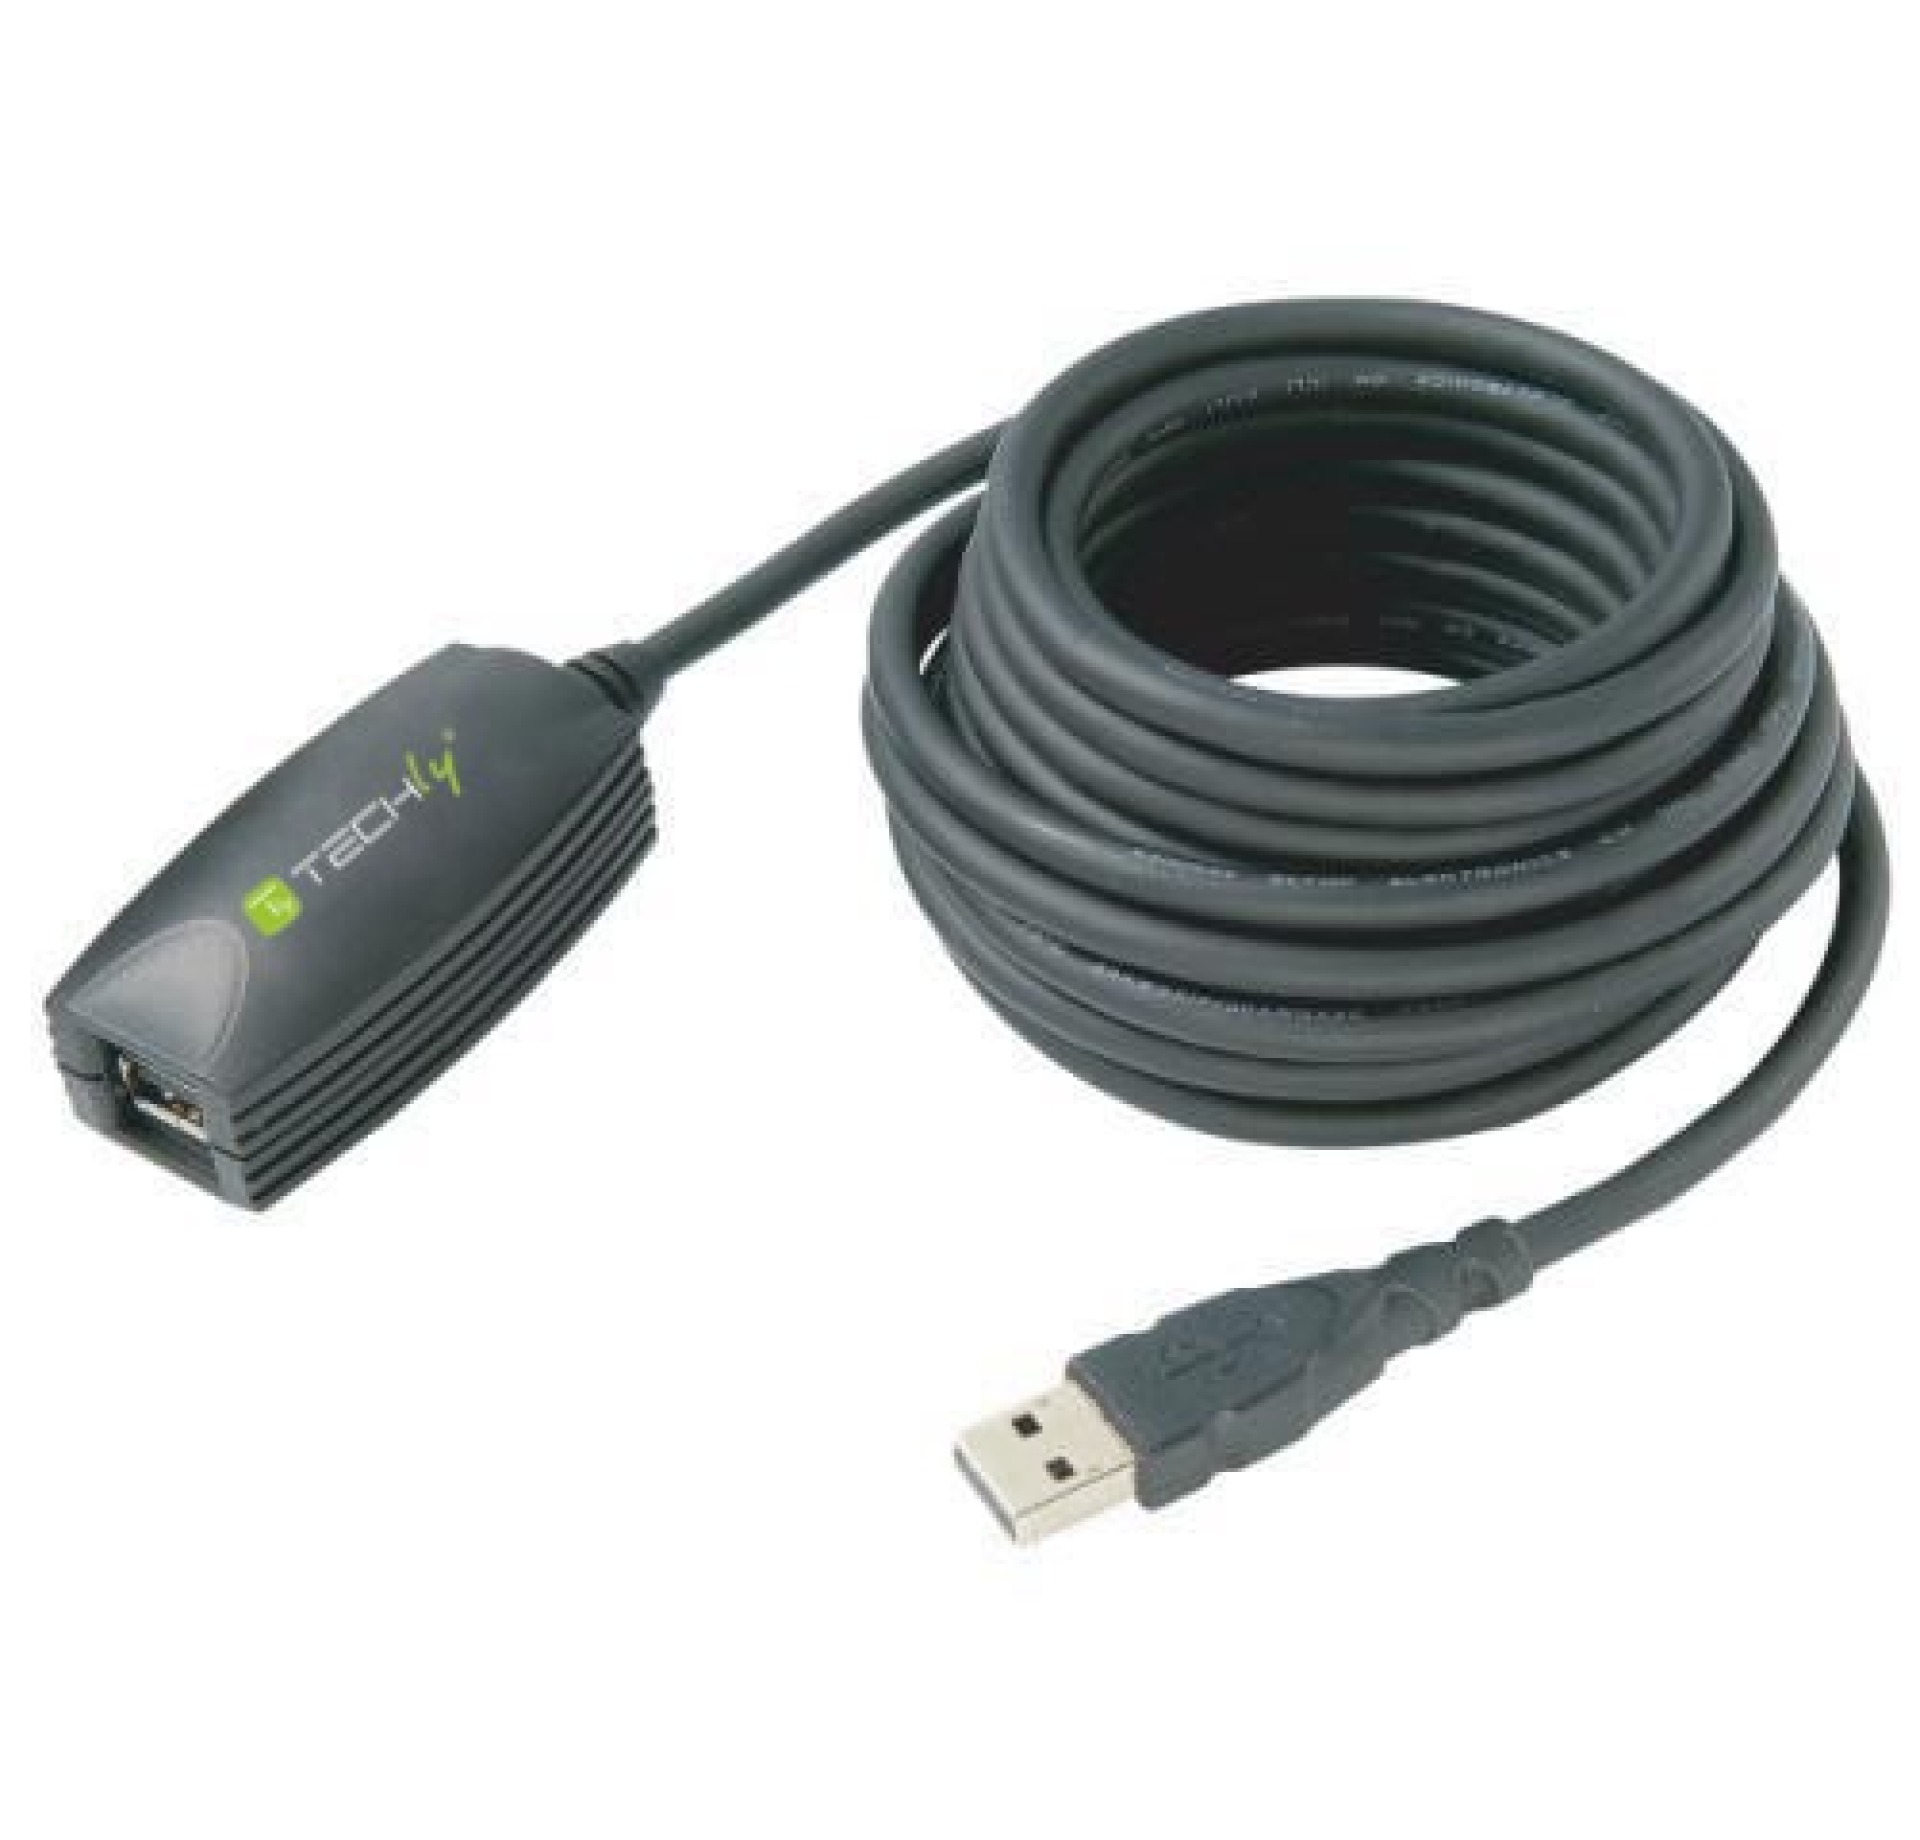 USB 3.0 Active Extension Cable, black, 5.0m